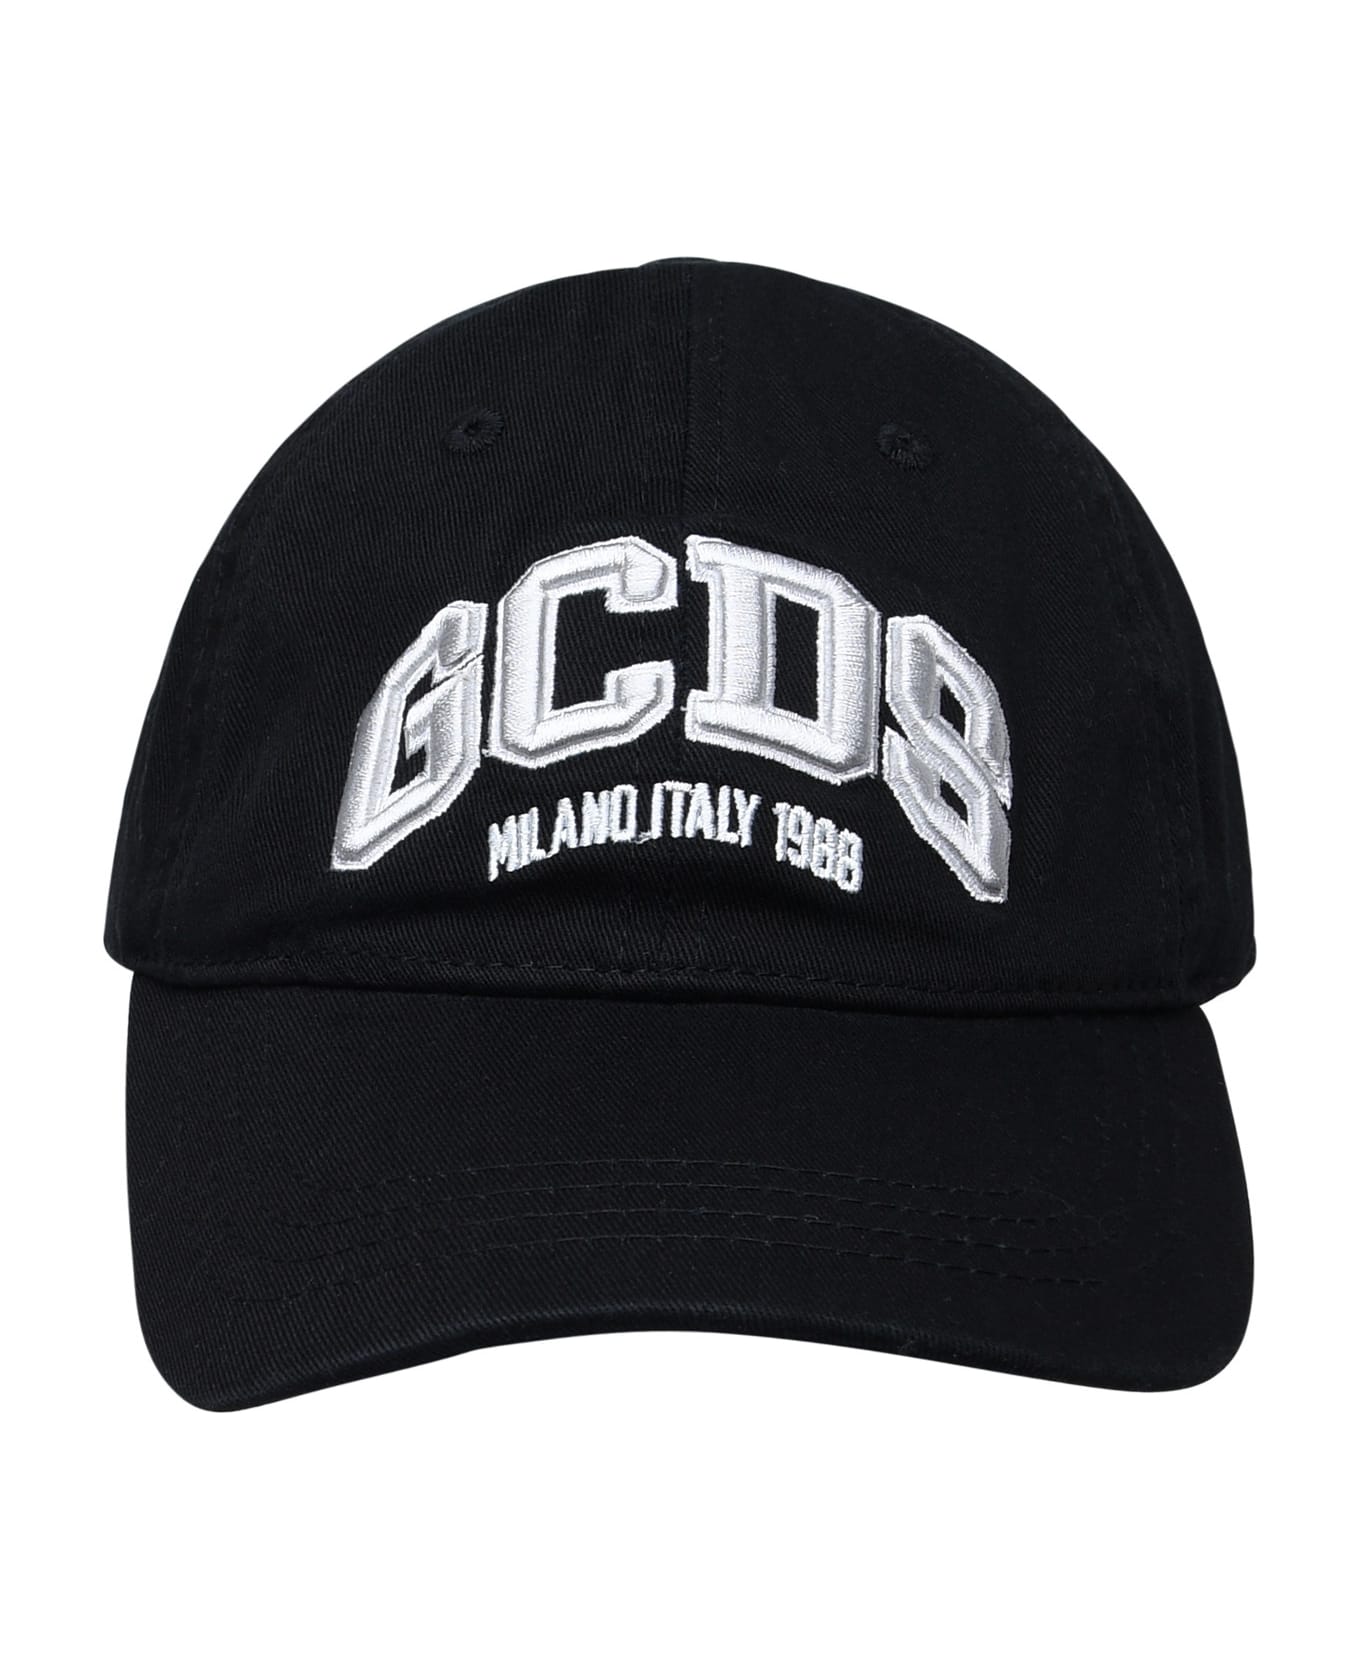 GCDS Black Cotton Hat - Black